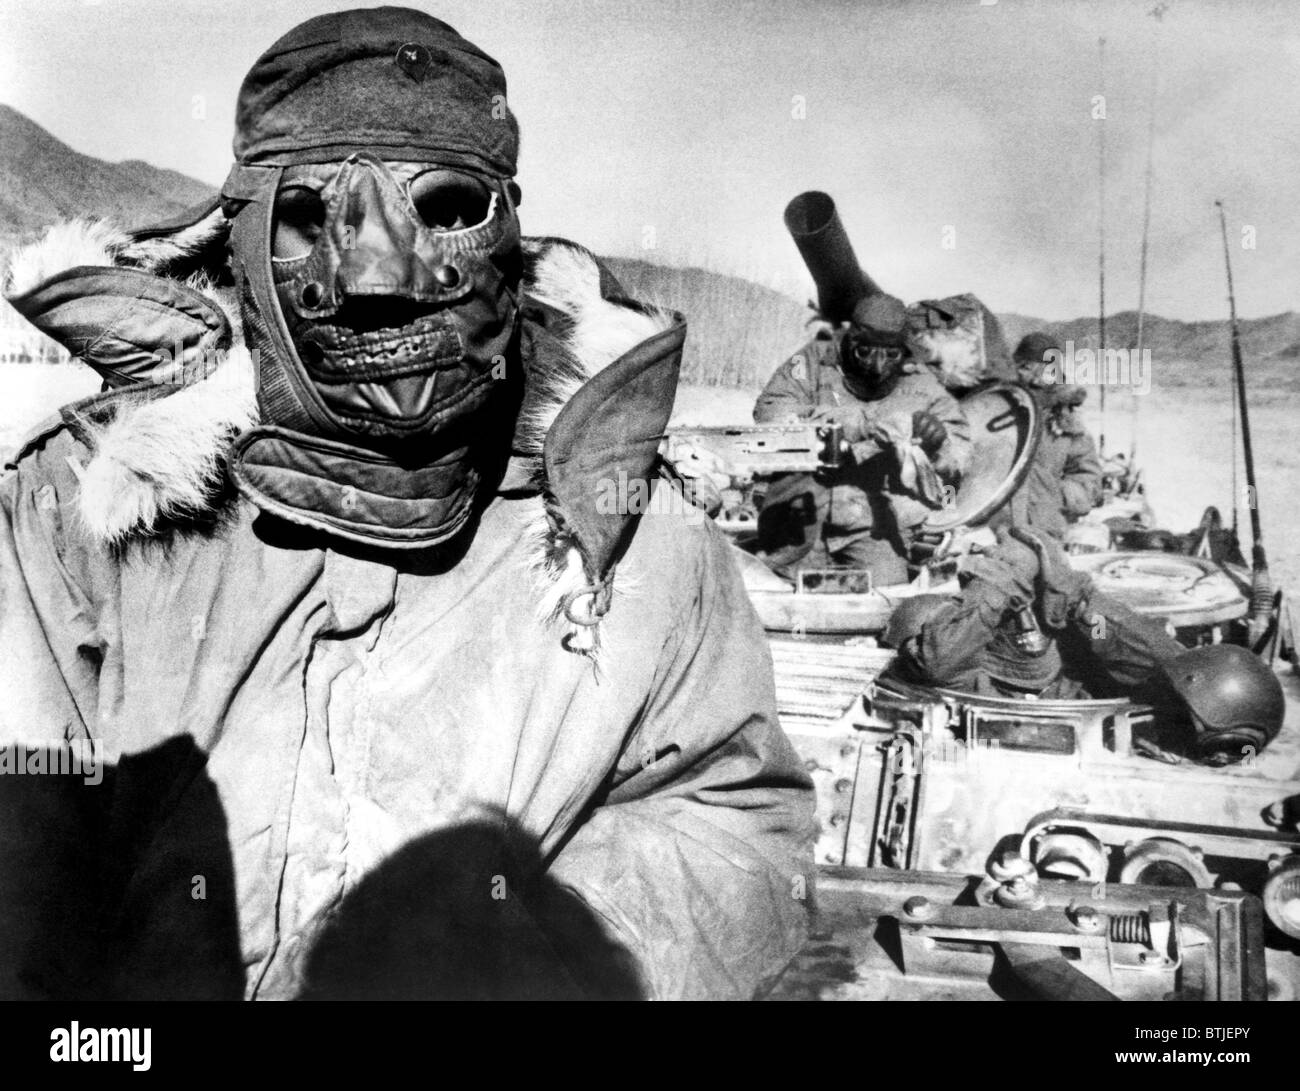 US-Marines in Korea während des Koreakrieges, 1951. Stockfoto